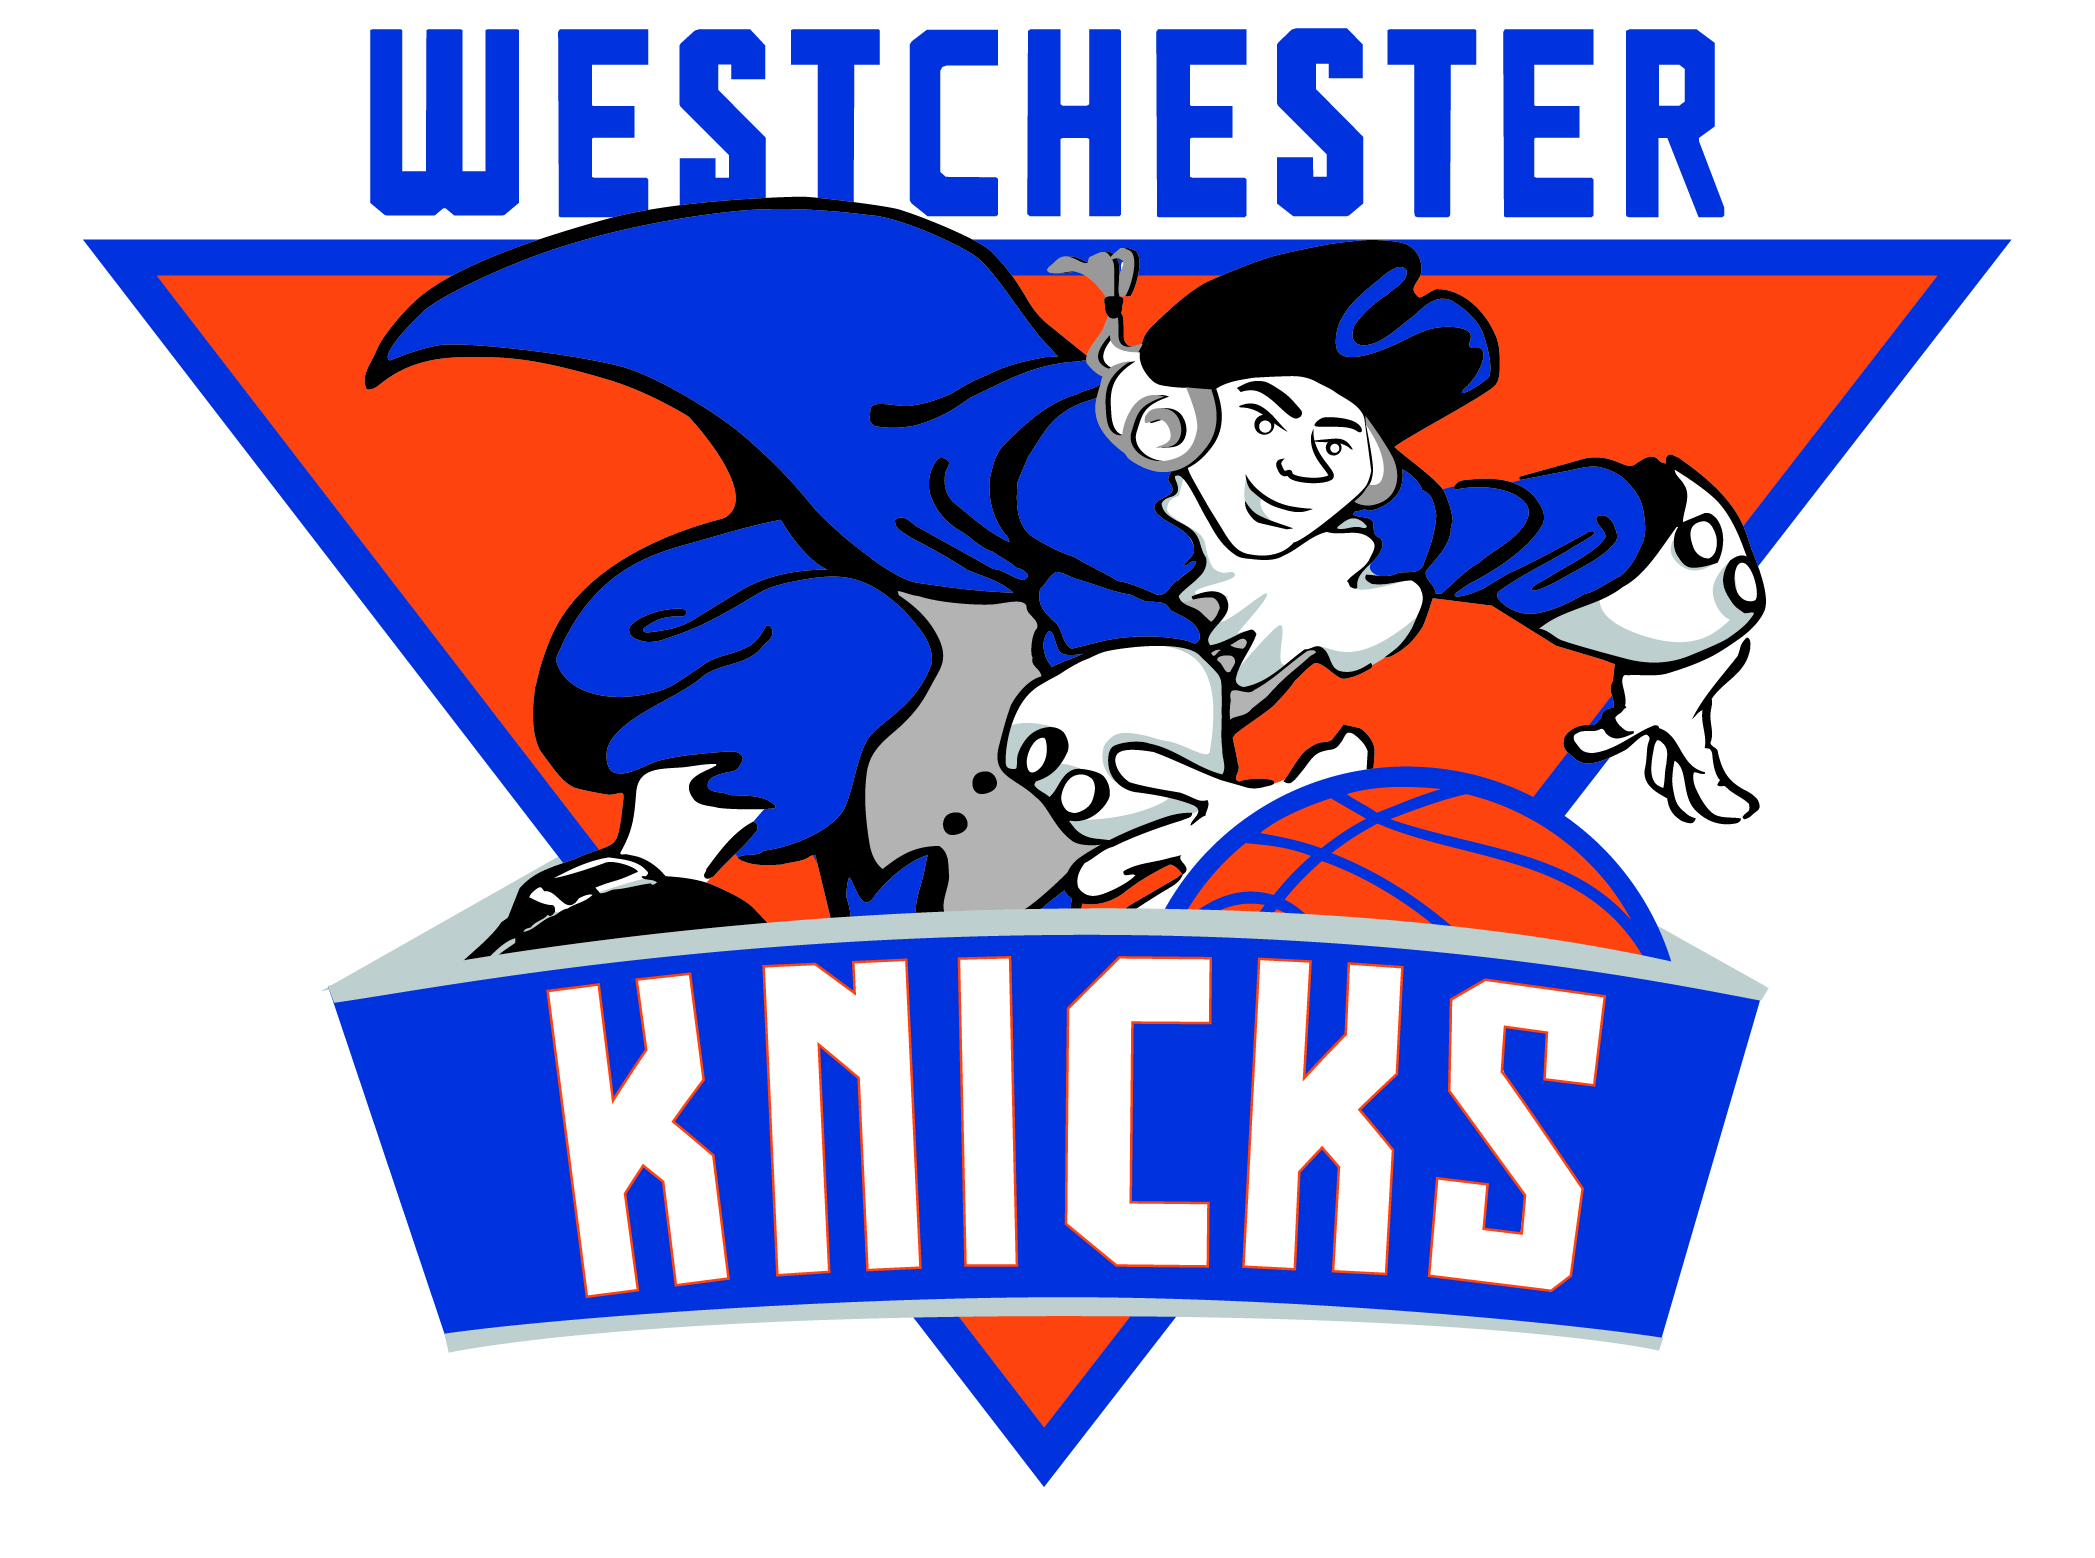 Westchester Knicks logo (Credit: Madison Square Garden) 